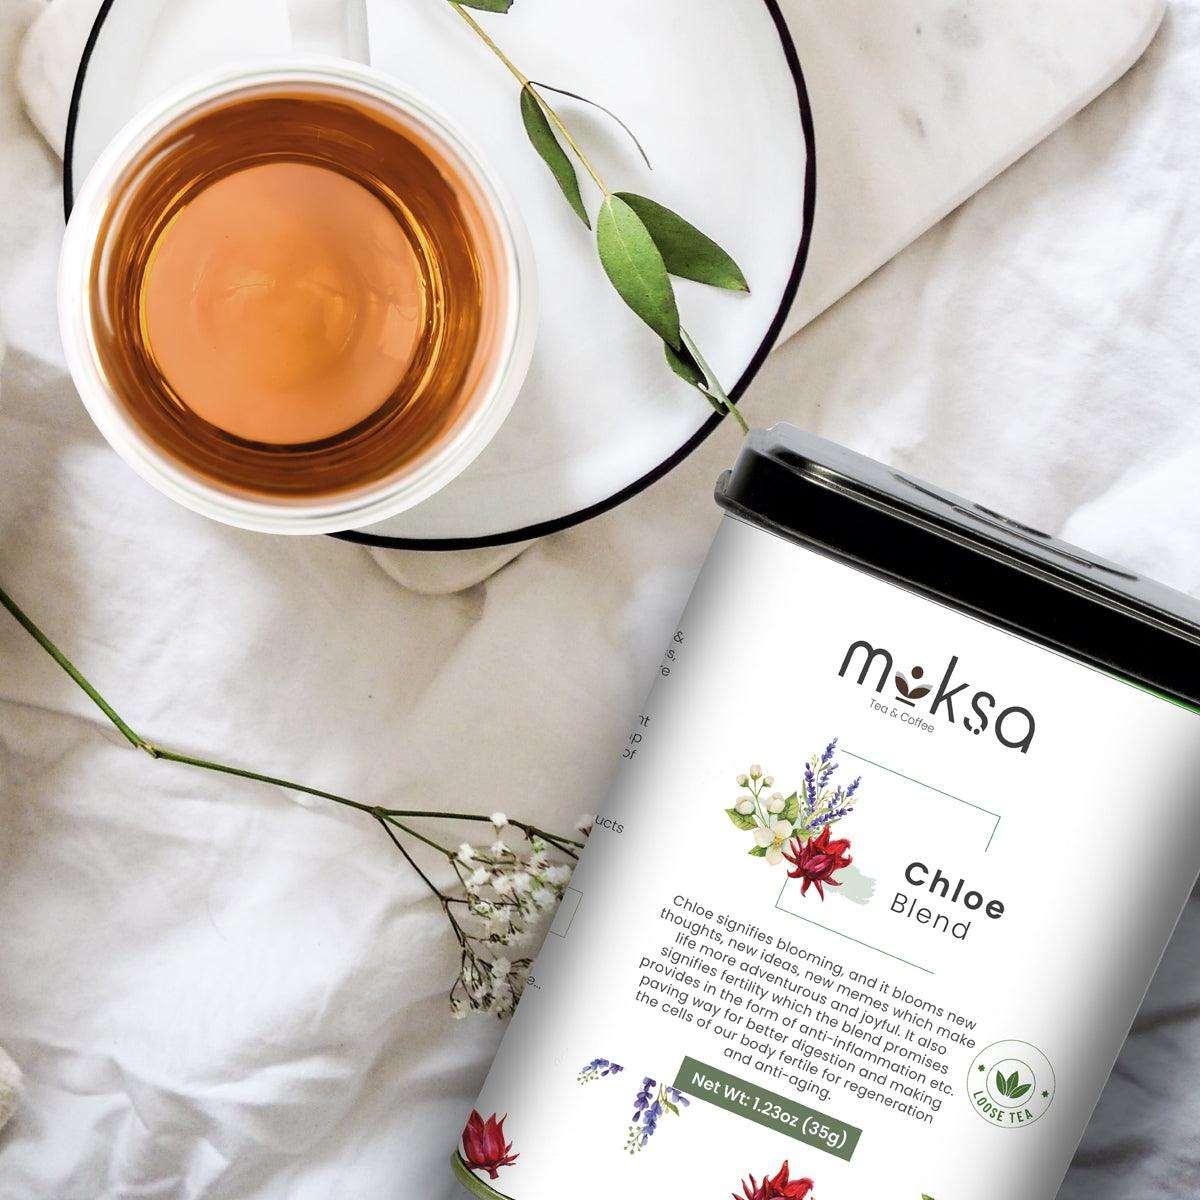 Leaf Jasmine, Roselle & Lavender Blend Tea - 35gm - MoksaExpectMiracles